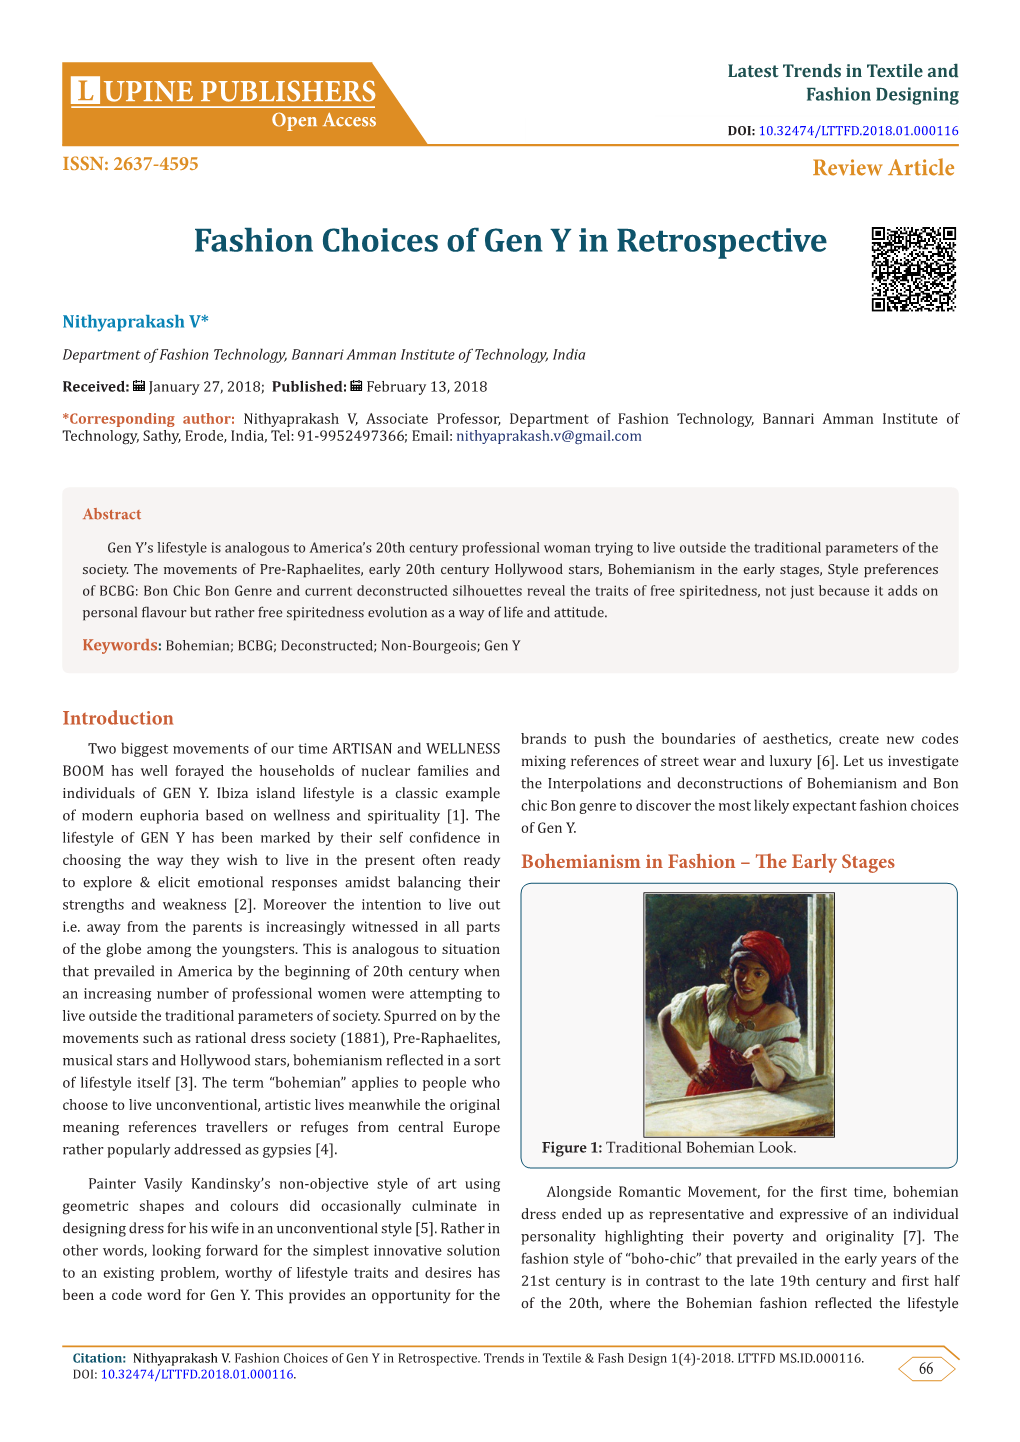 Fashion Choices of Gen Y in Retrospective